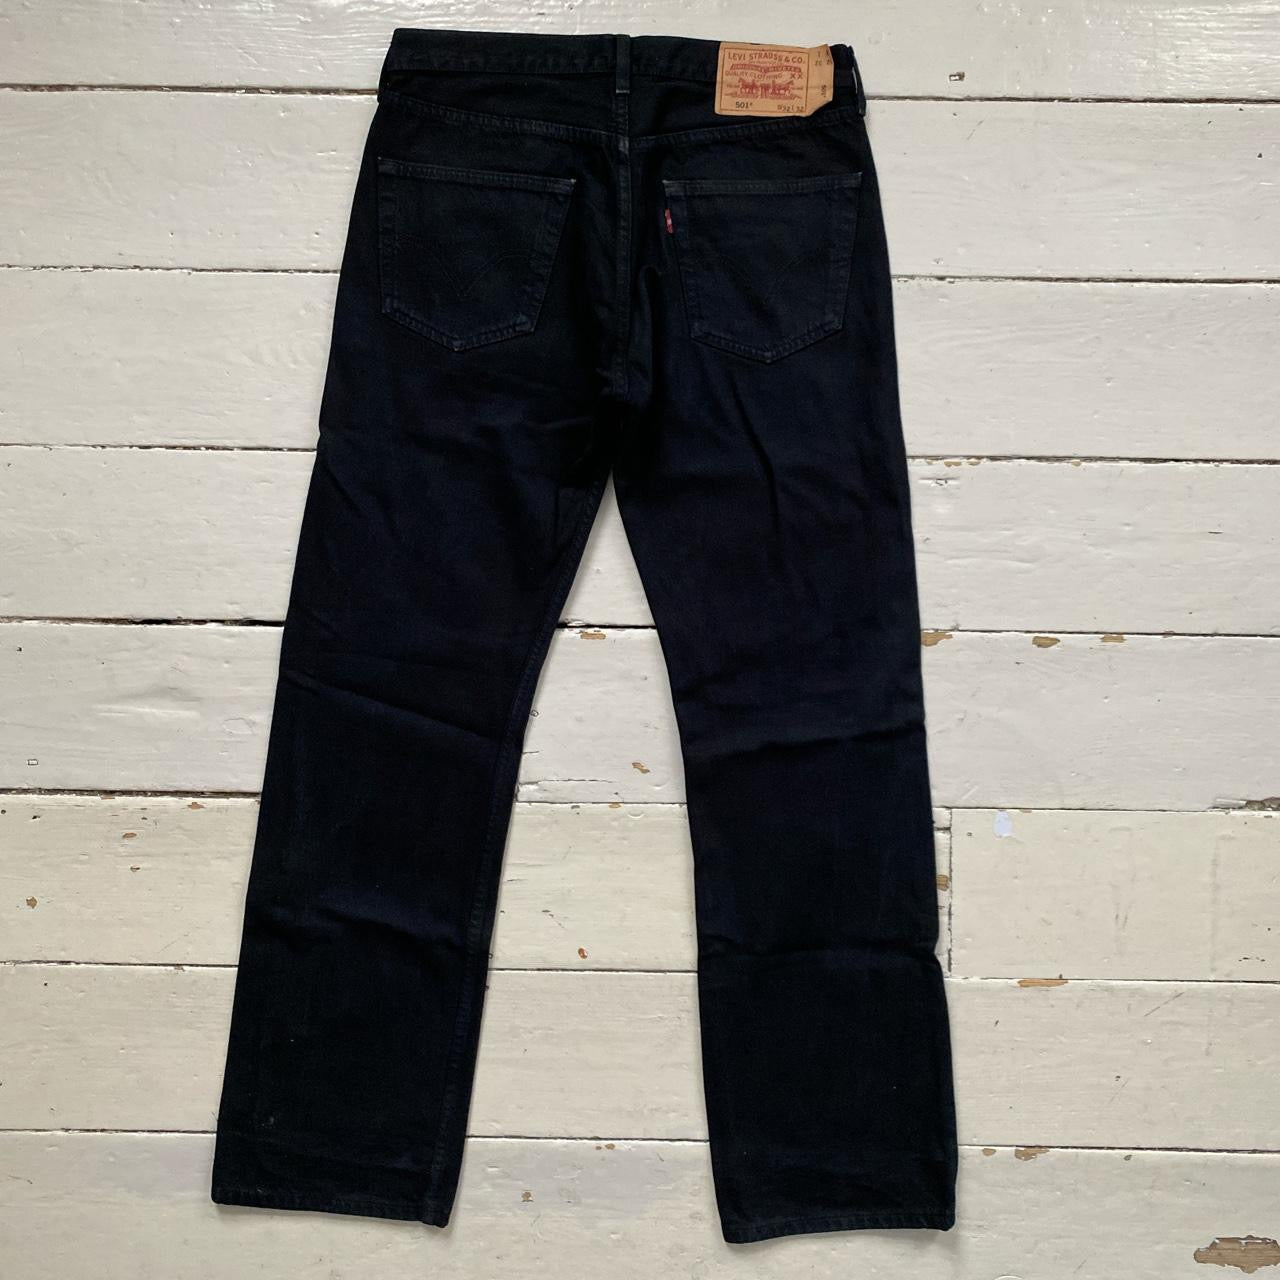 Armani Black Jeans (32/32)